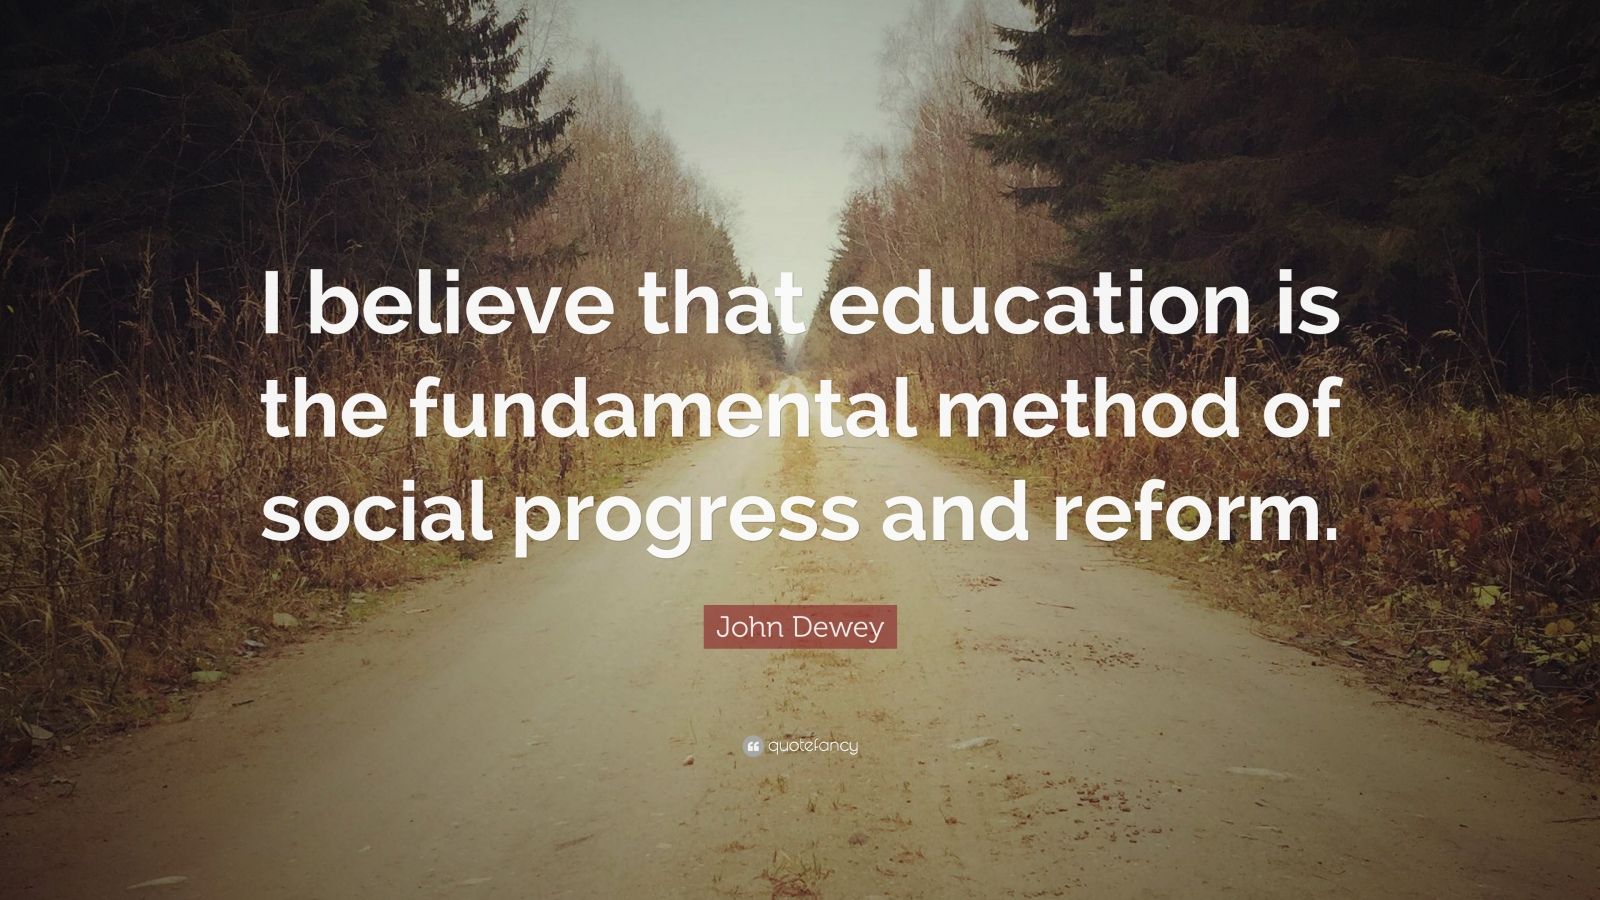 John Dewey Quote: “I believe that education is the fundamental method ...